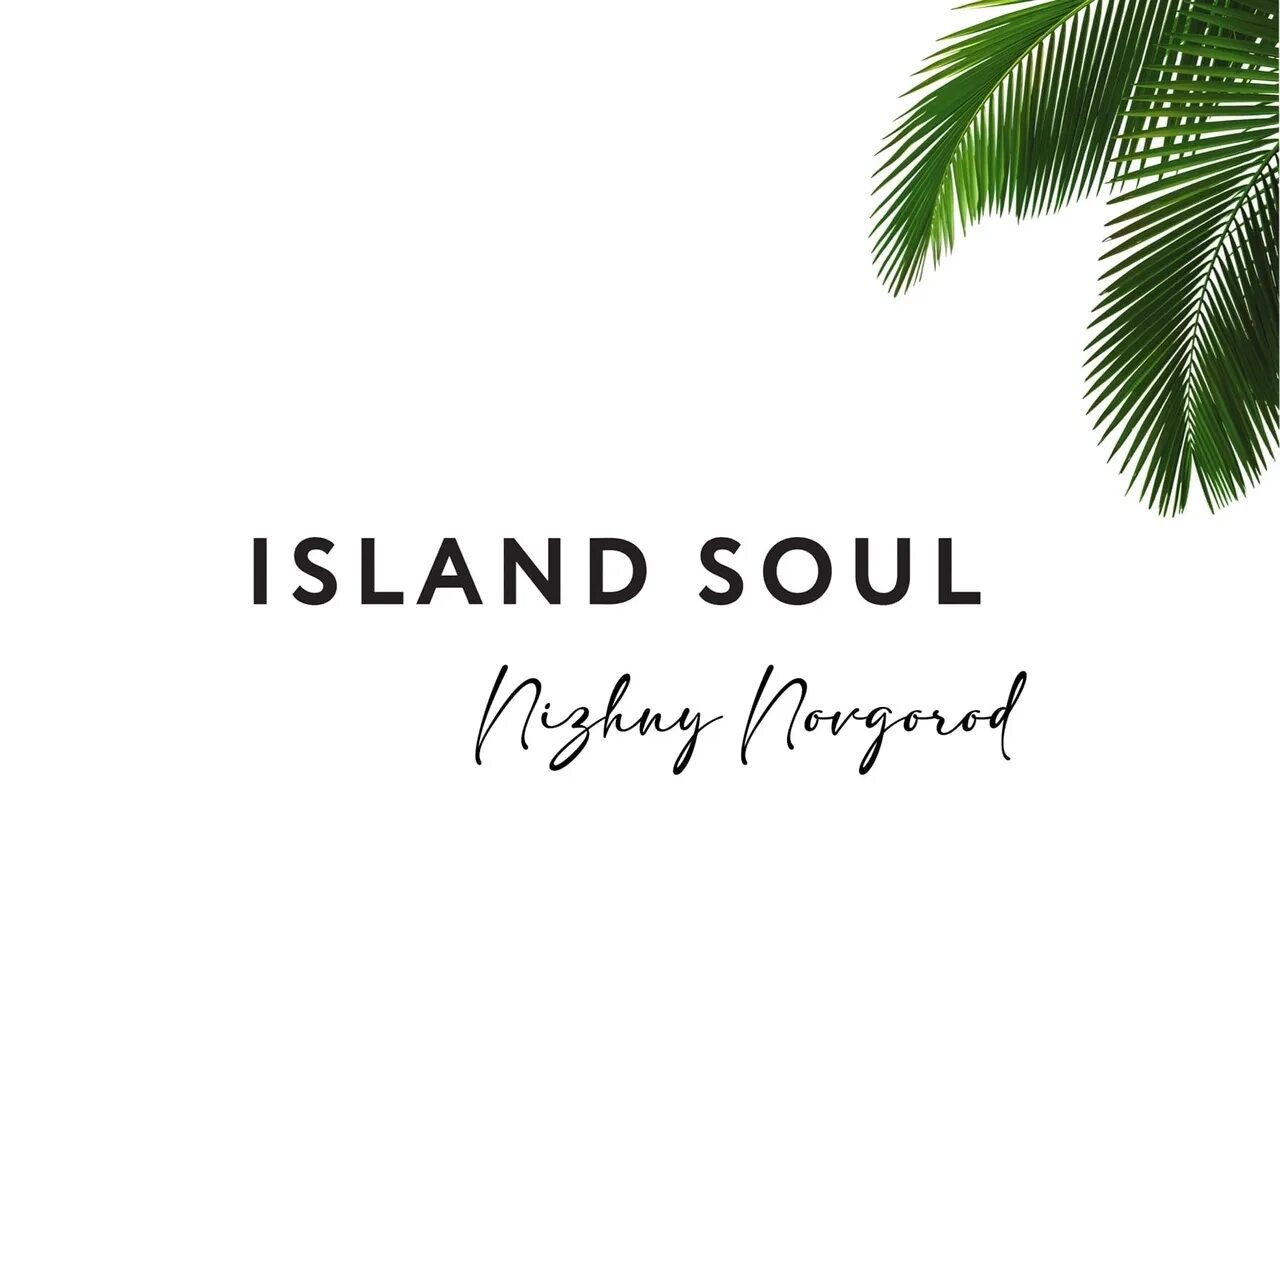 Island soul интернет магазин. Айленд соул. Island Soul упаковка. Серебро Island Soul. Логотип Исланд соул.